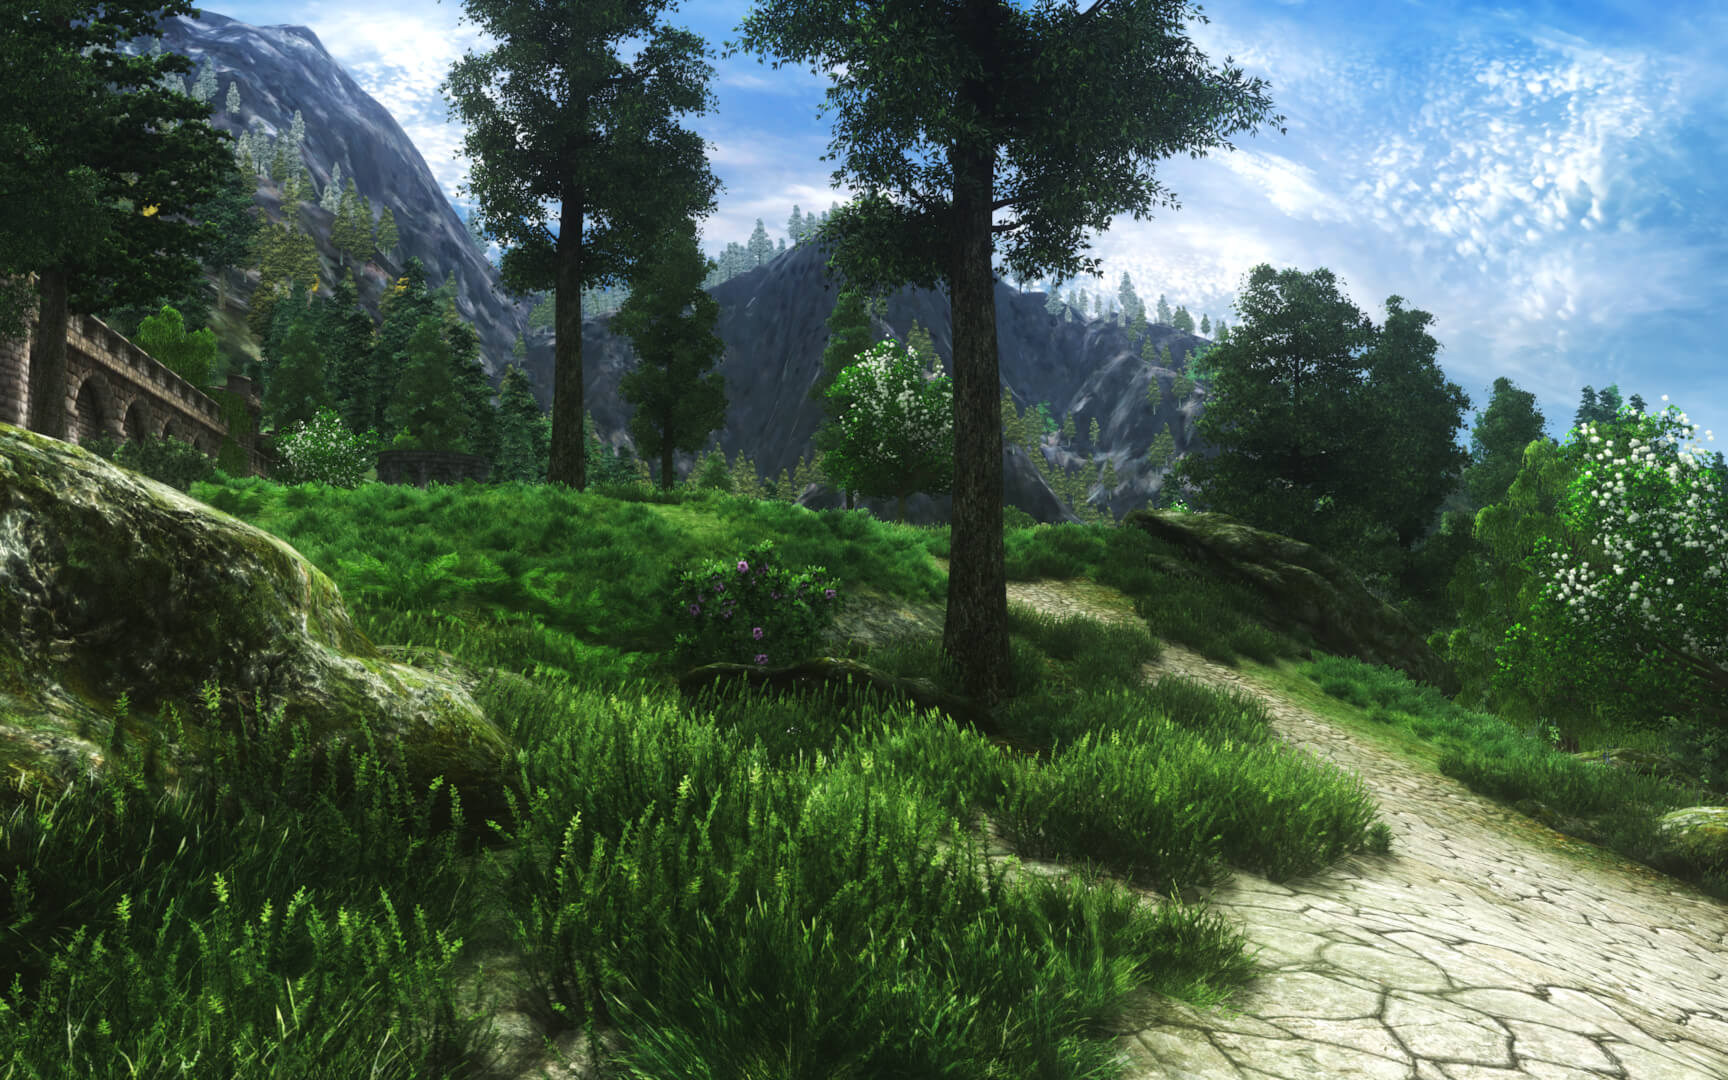 oblivion graphics overhaul mod program